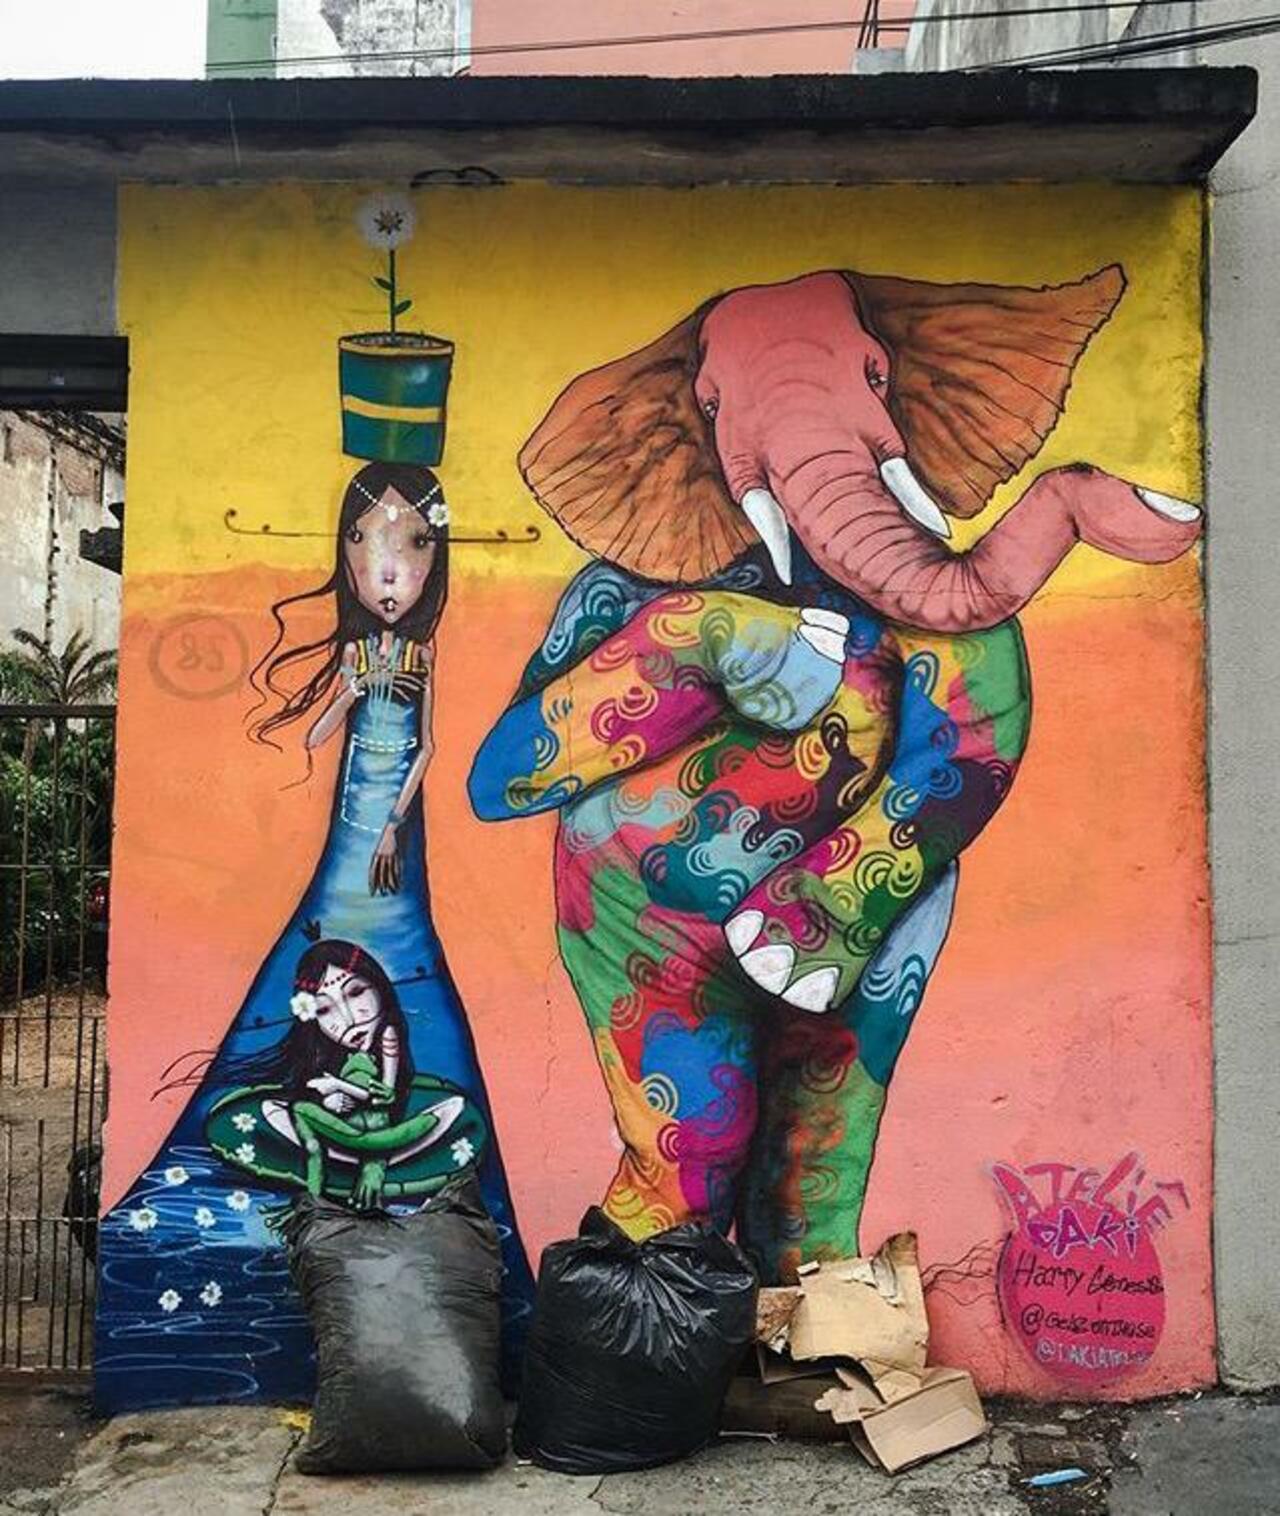 Street Art by Harry Geneis & Gelson in São Paulo #art #mural #graffiti #streetart http://t.co/SlLbhuMZfD … … … http://twitter.com/charlesjackso14/status/648021499731947520